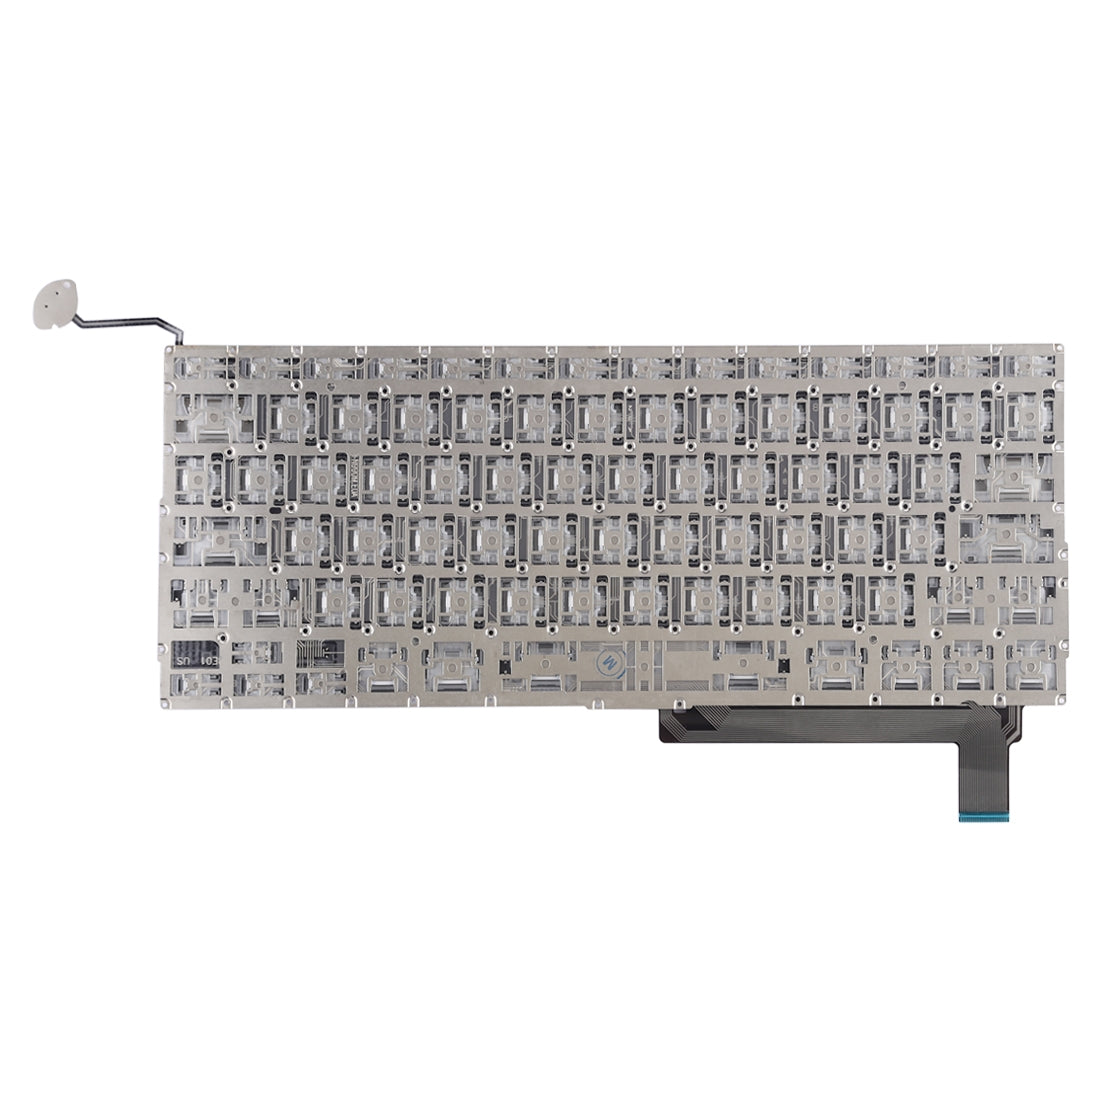 Keyboard US Version without ñ Apple MacBook Pro15 A1286